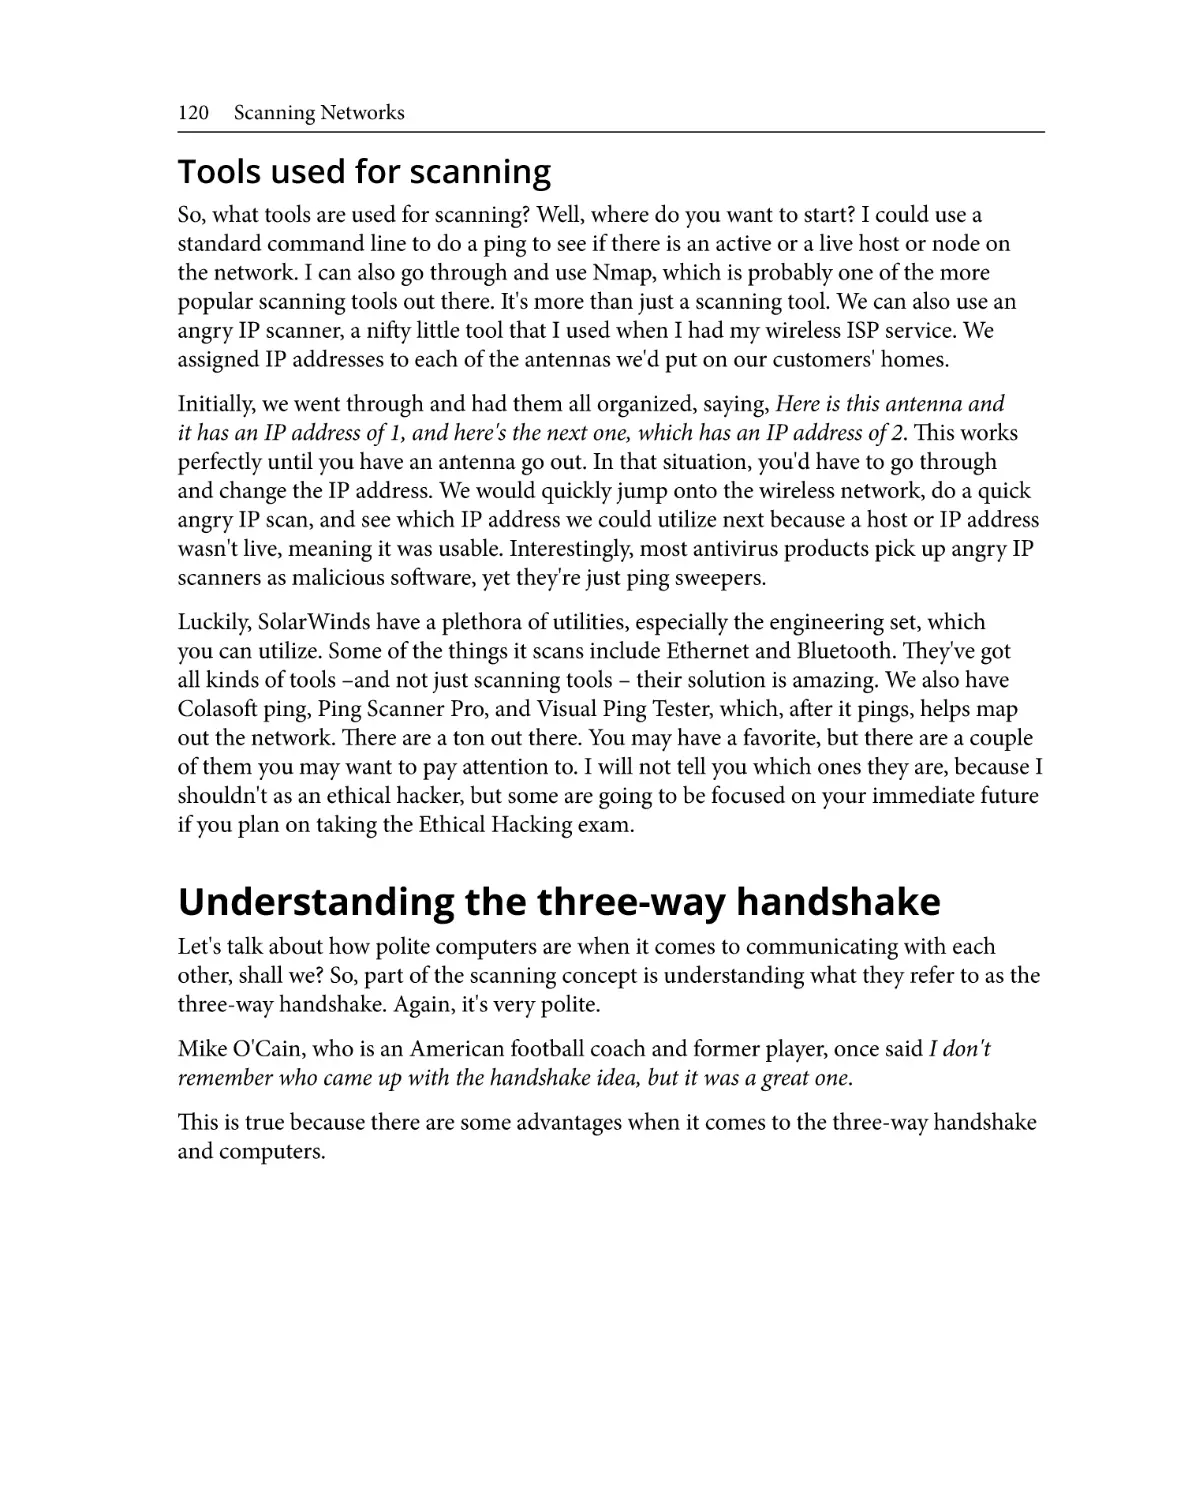 Tools used for scanning
Understanding the three-way handshake